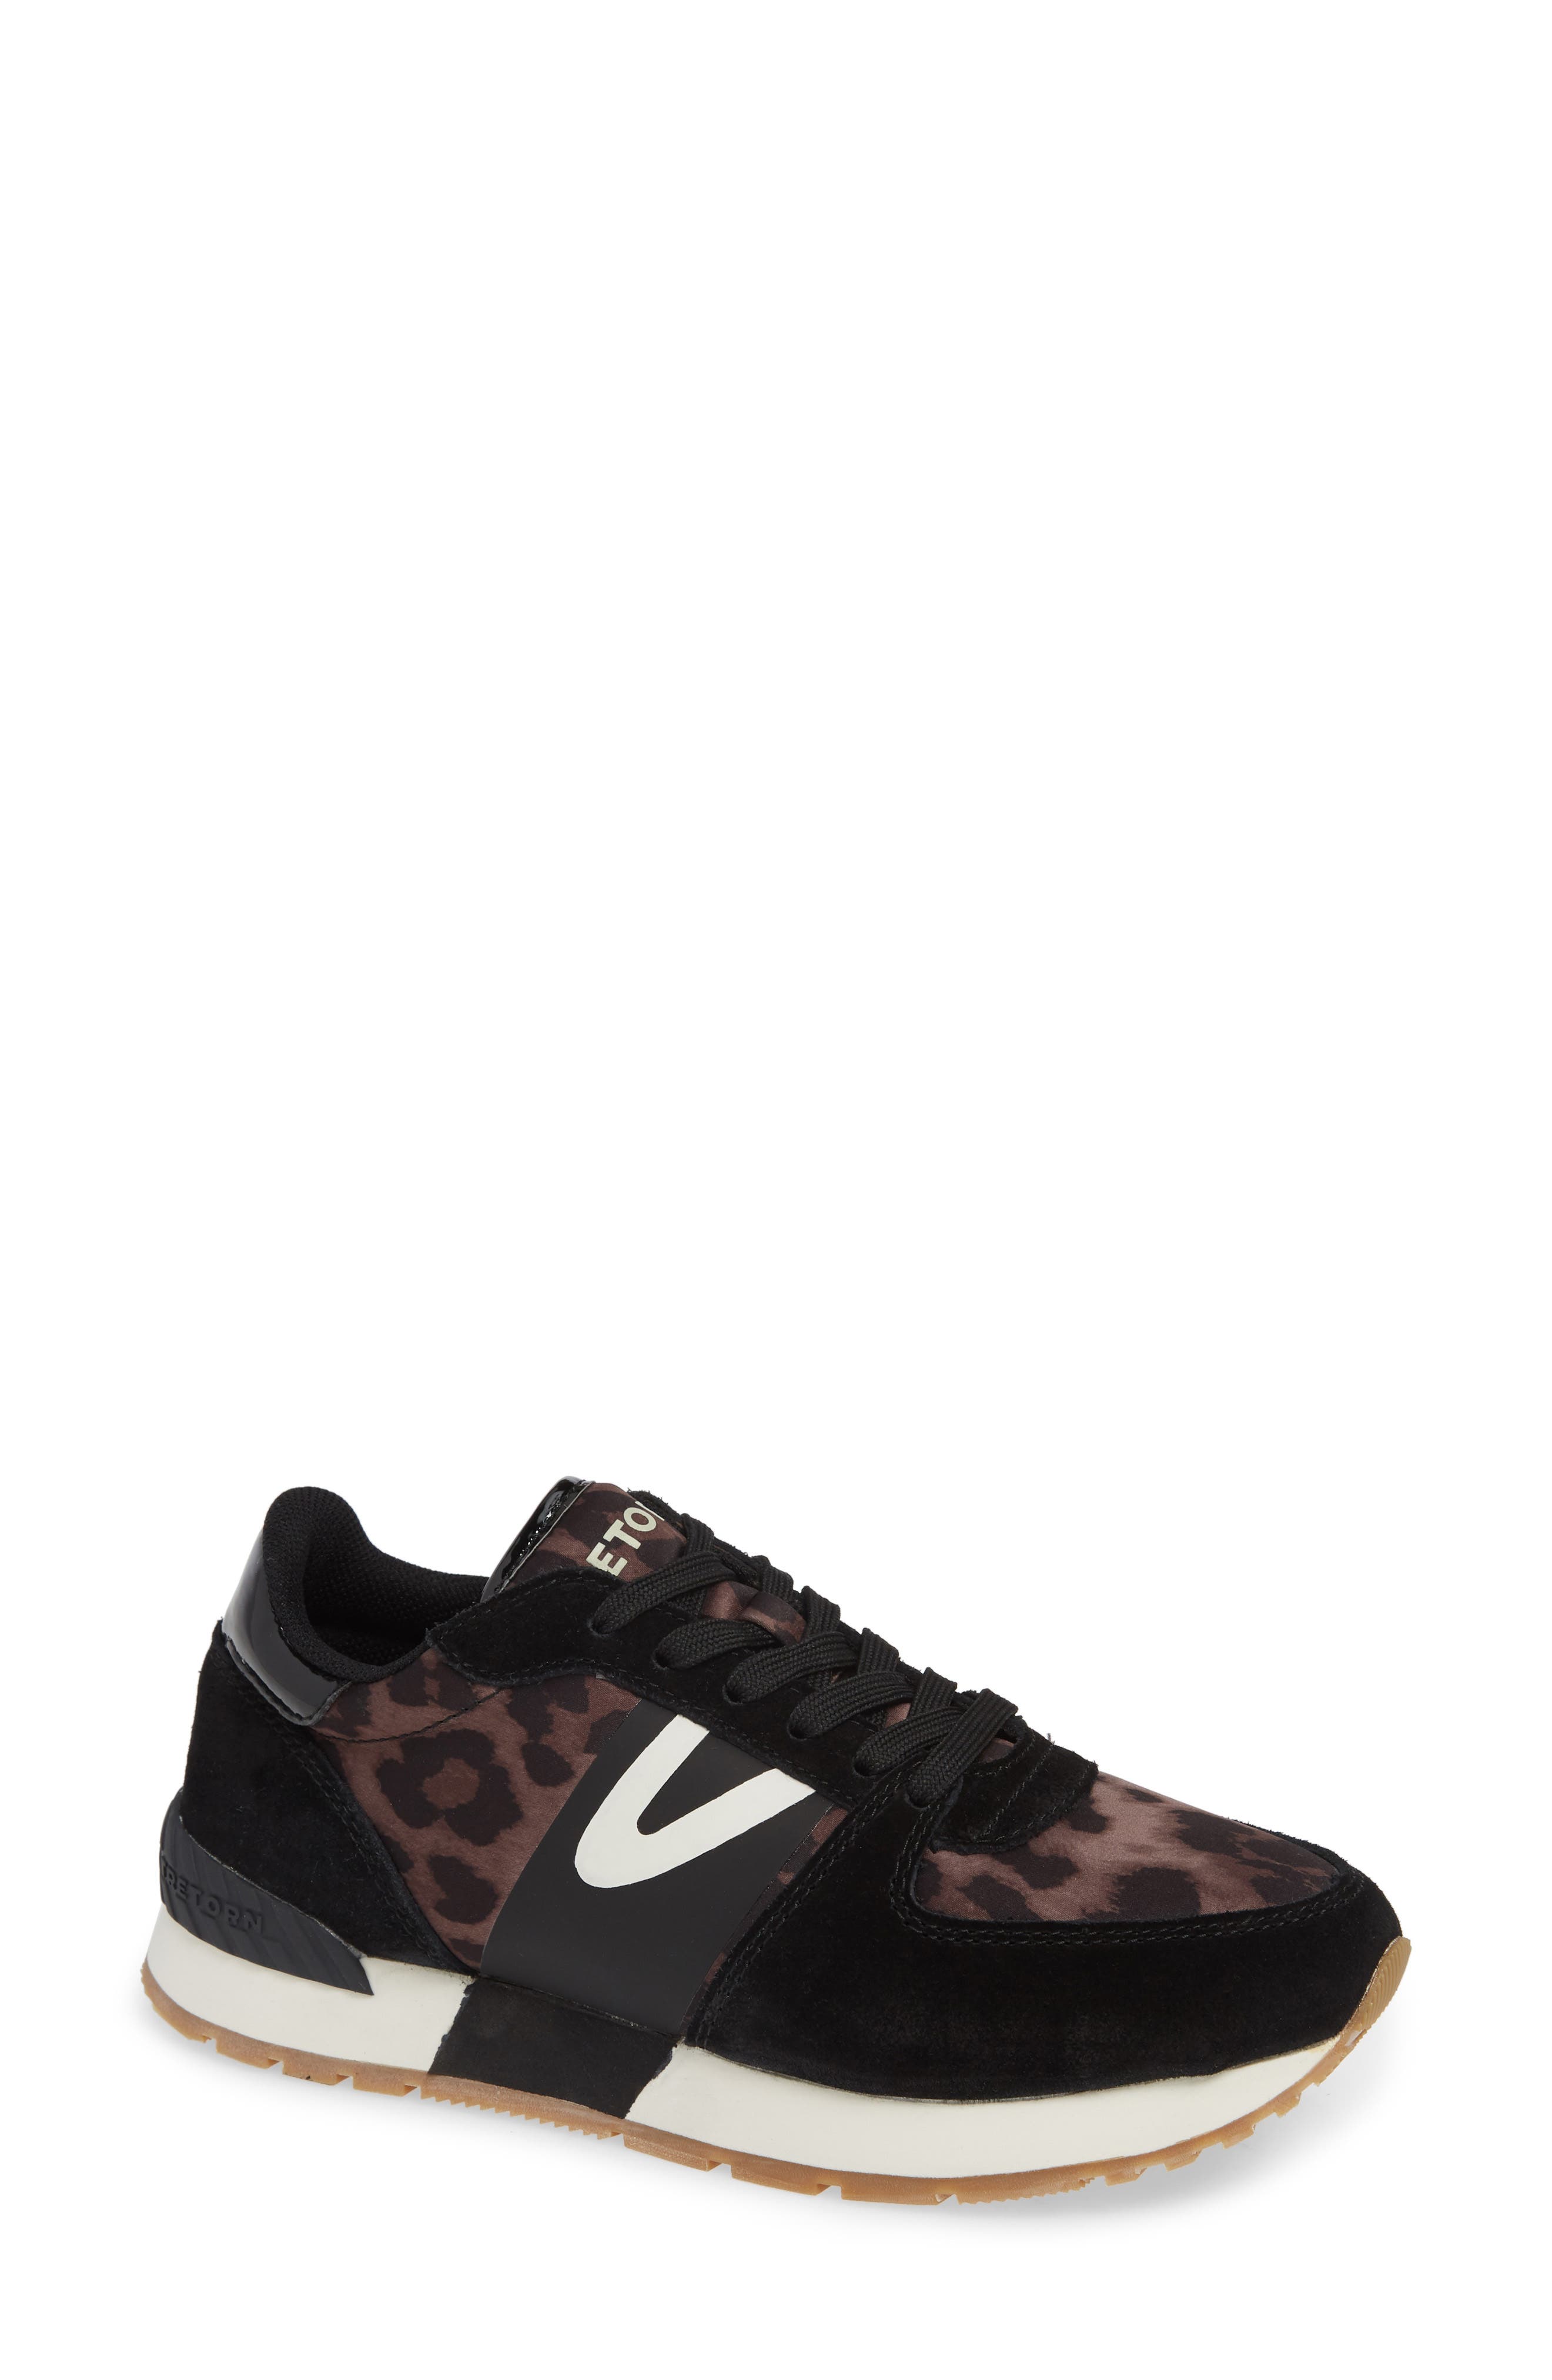 tretorn leopard shoes